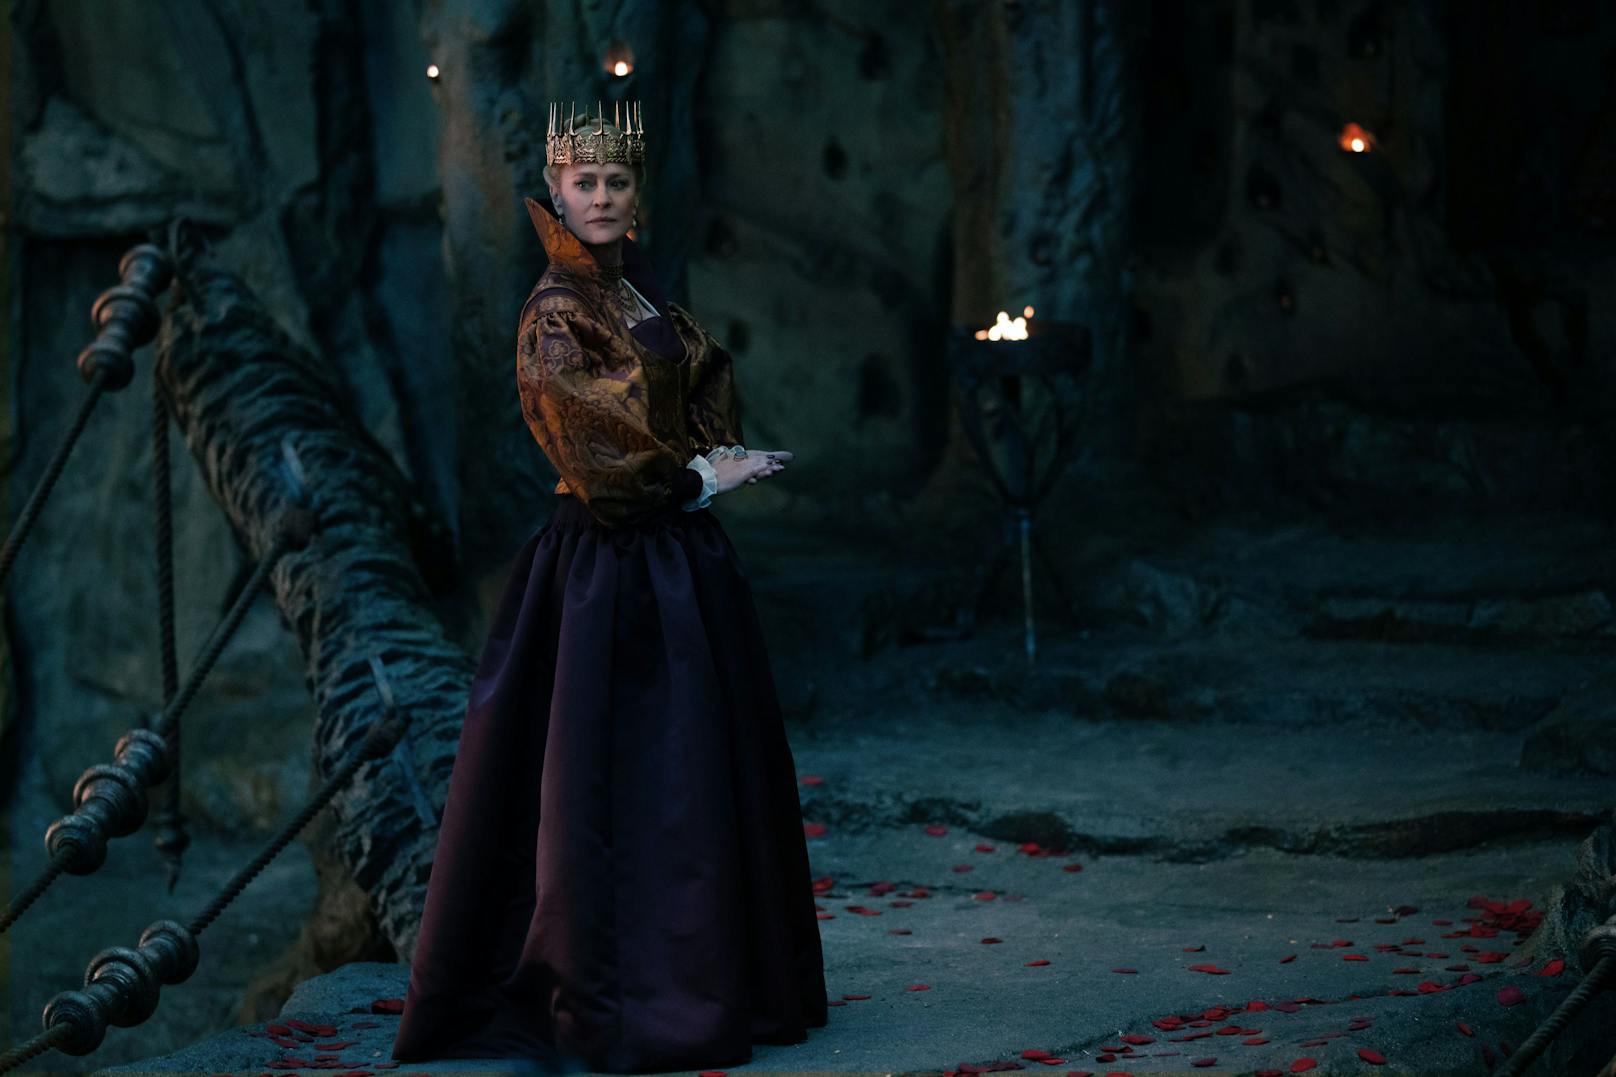 Golden-Globe-Gewinnerin Robin Wright ("Forrest Gump", "House of Cards") als Queen Isabelle